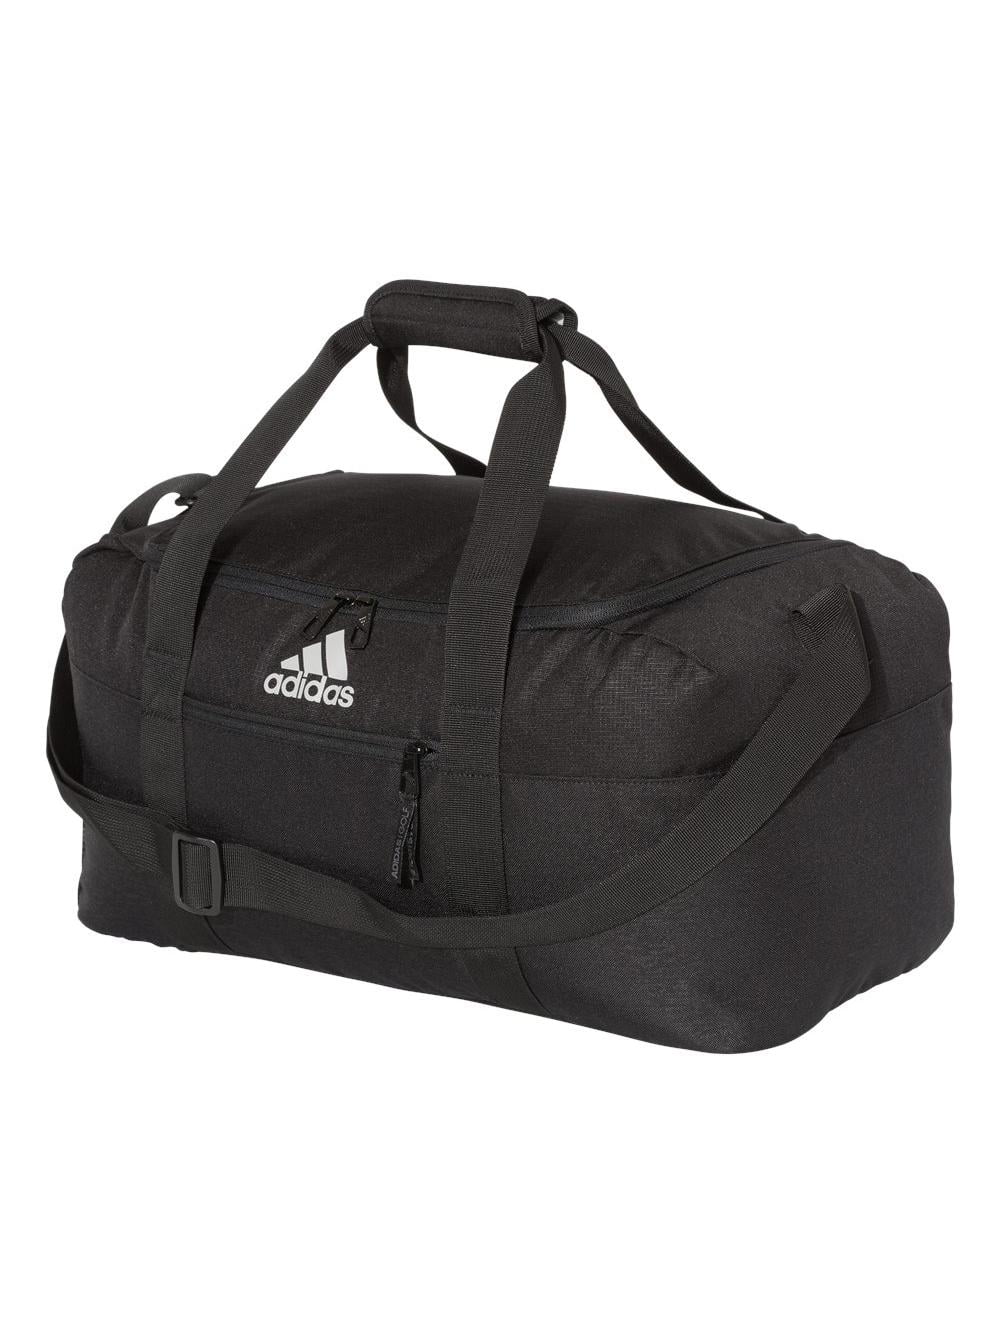 Adidas - 35L Weekend Duffel Bag - A311 - Walmart.com